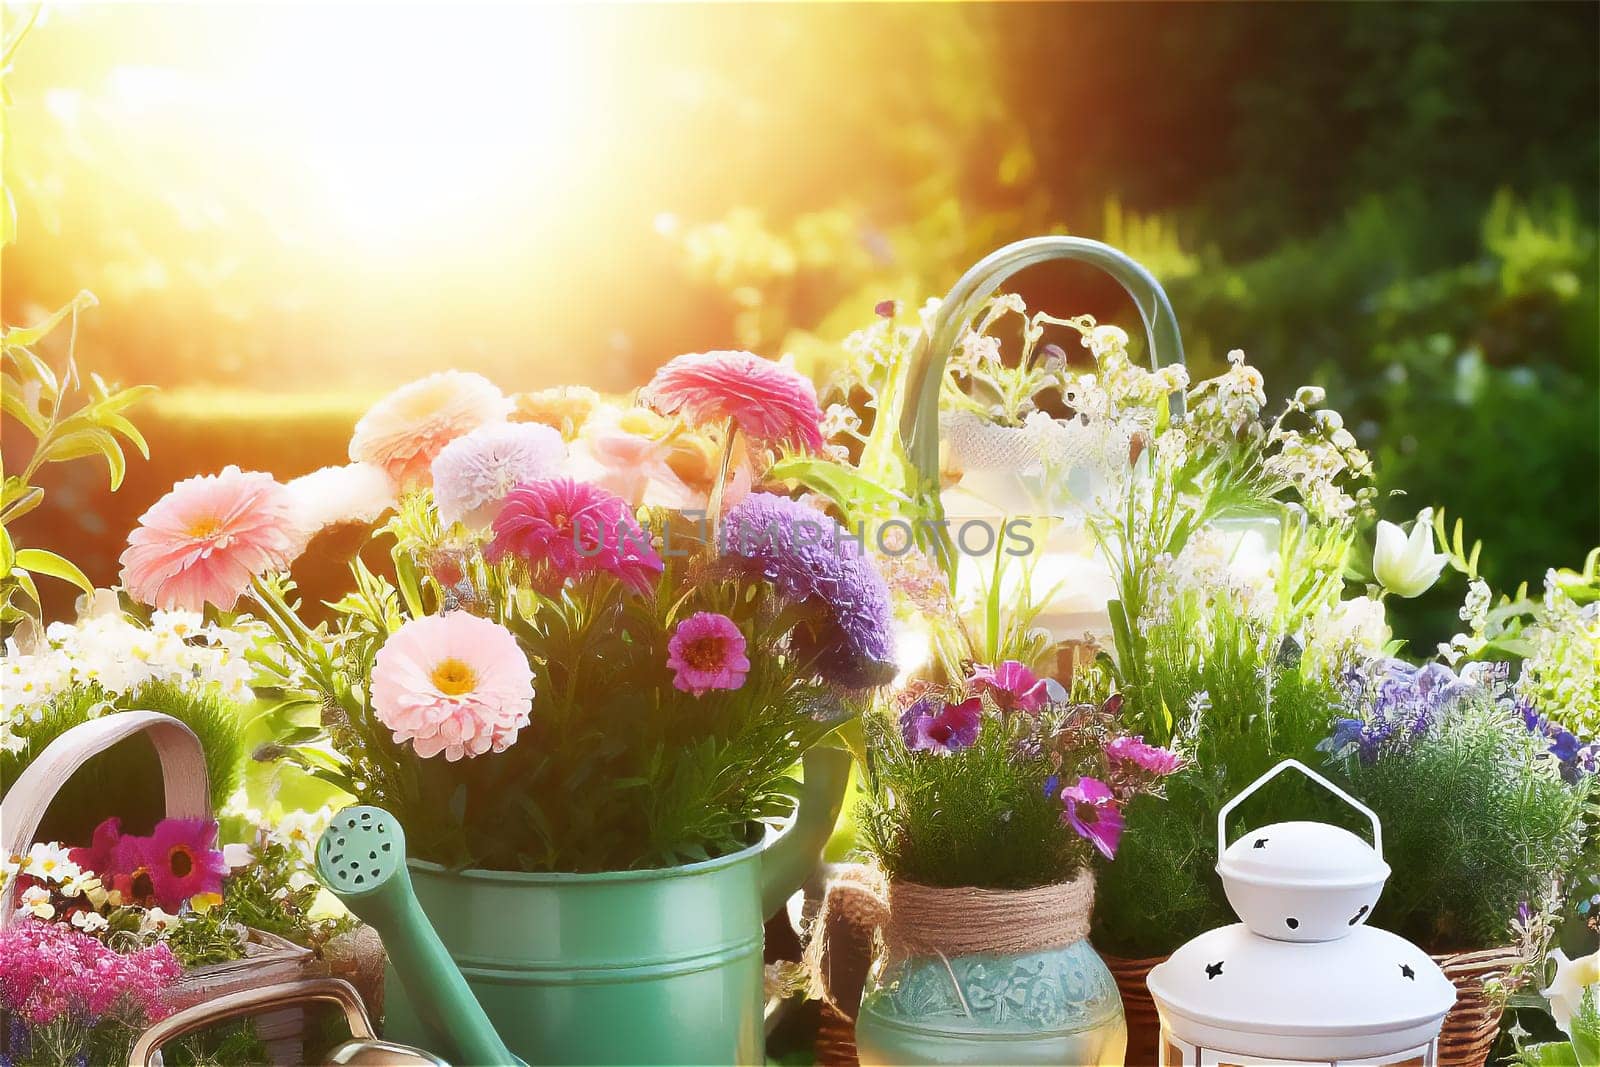 Gardening, different spring and summer flowers, gardening tools on garden table. by EkaterinaPereslavtseva